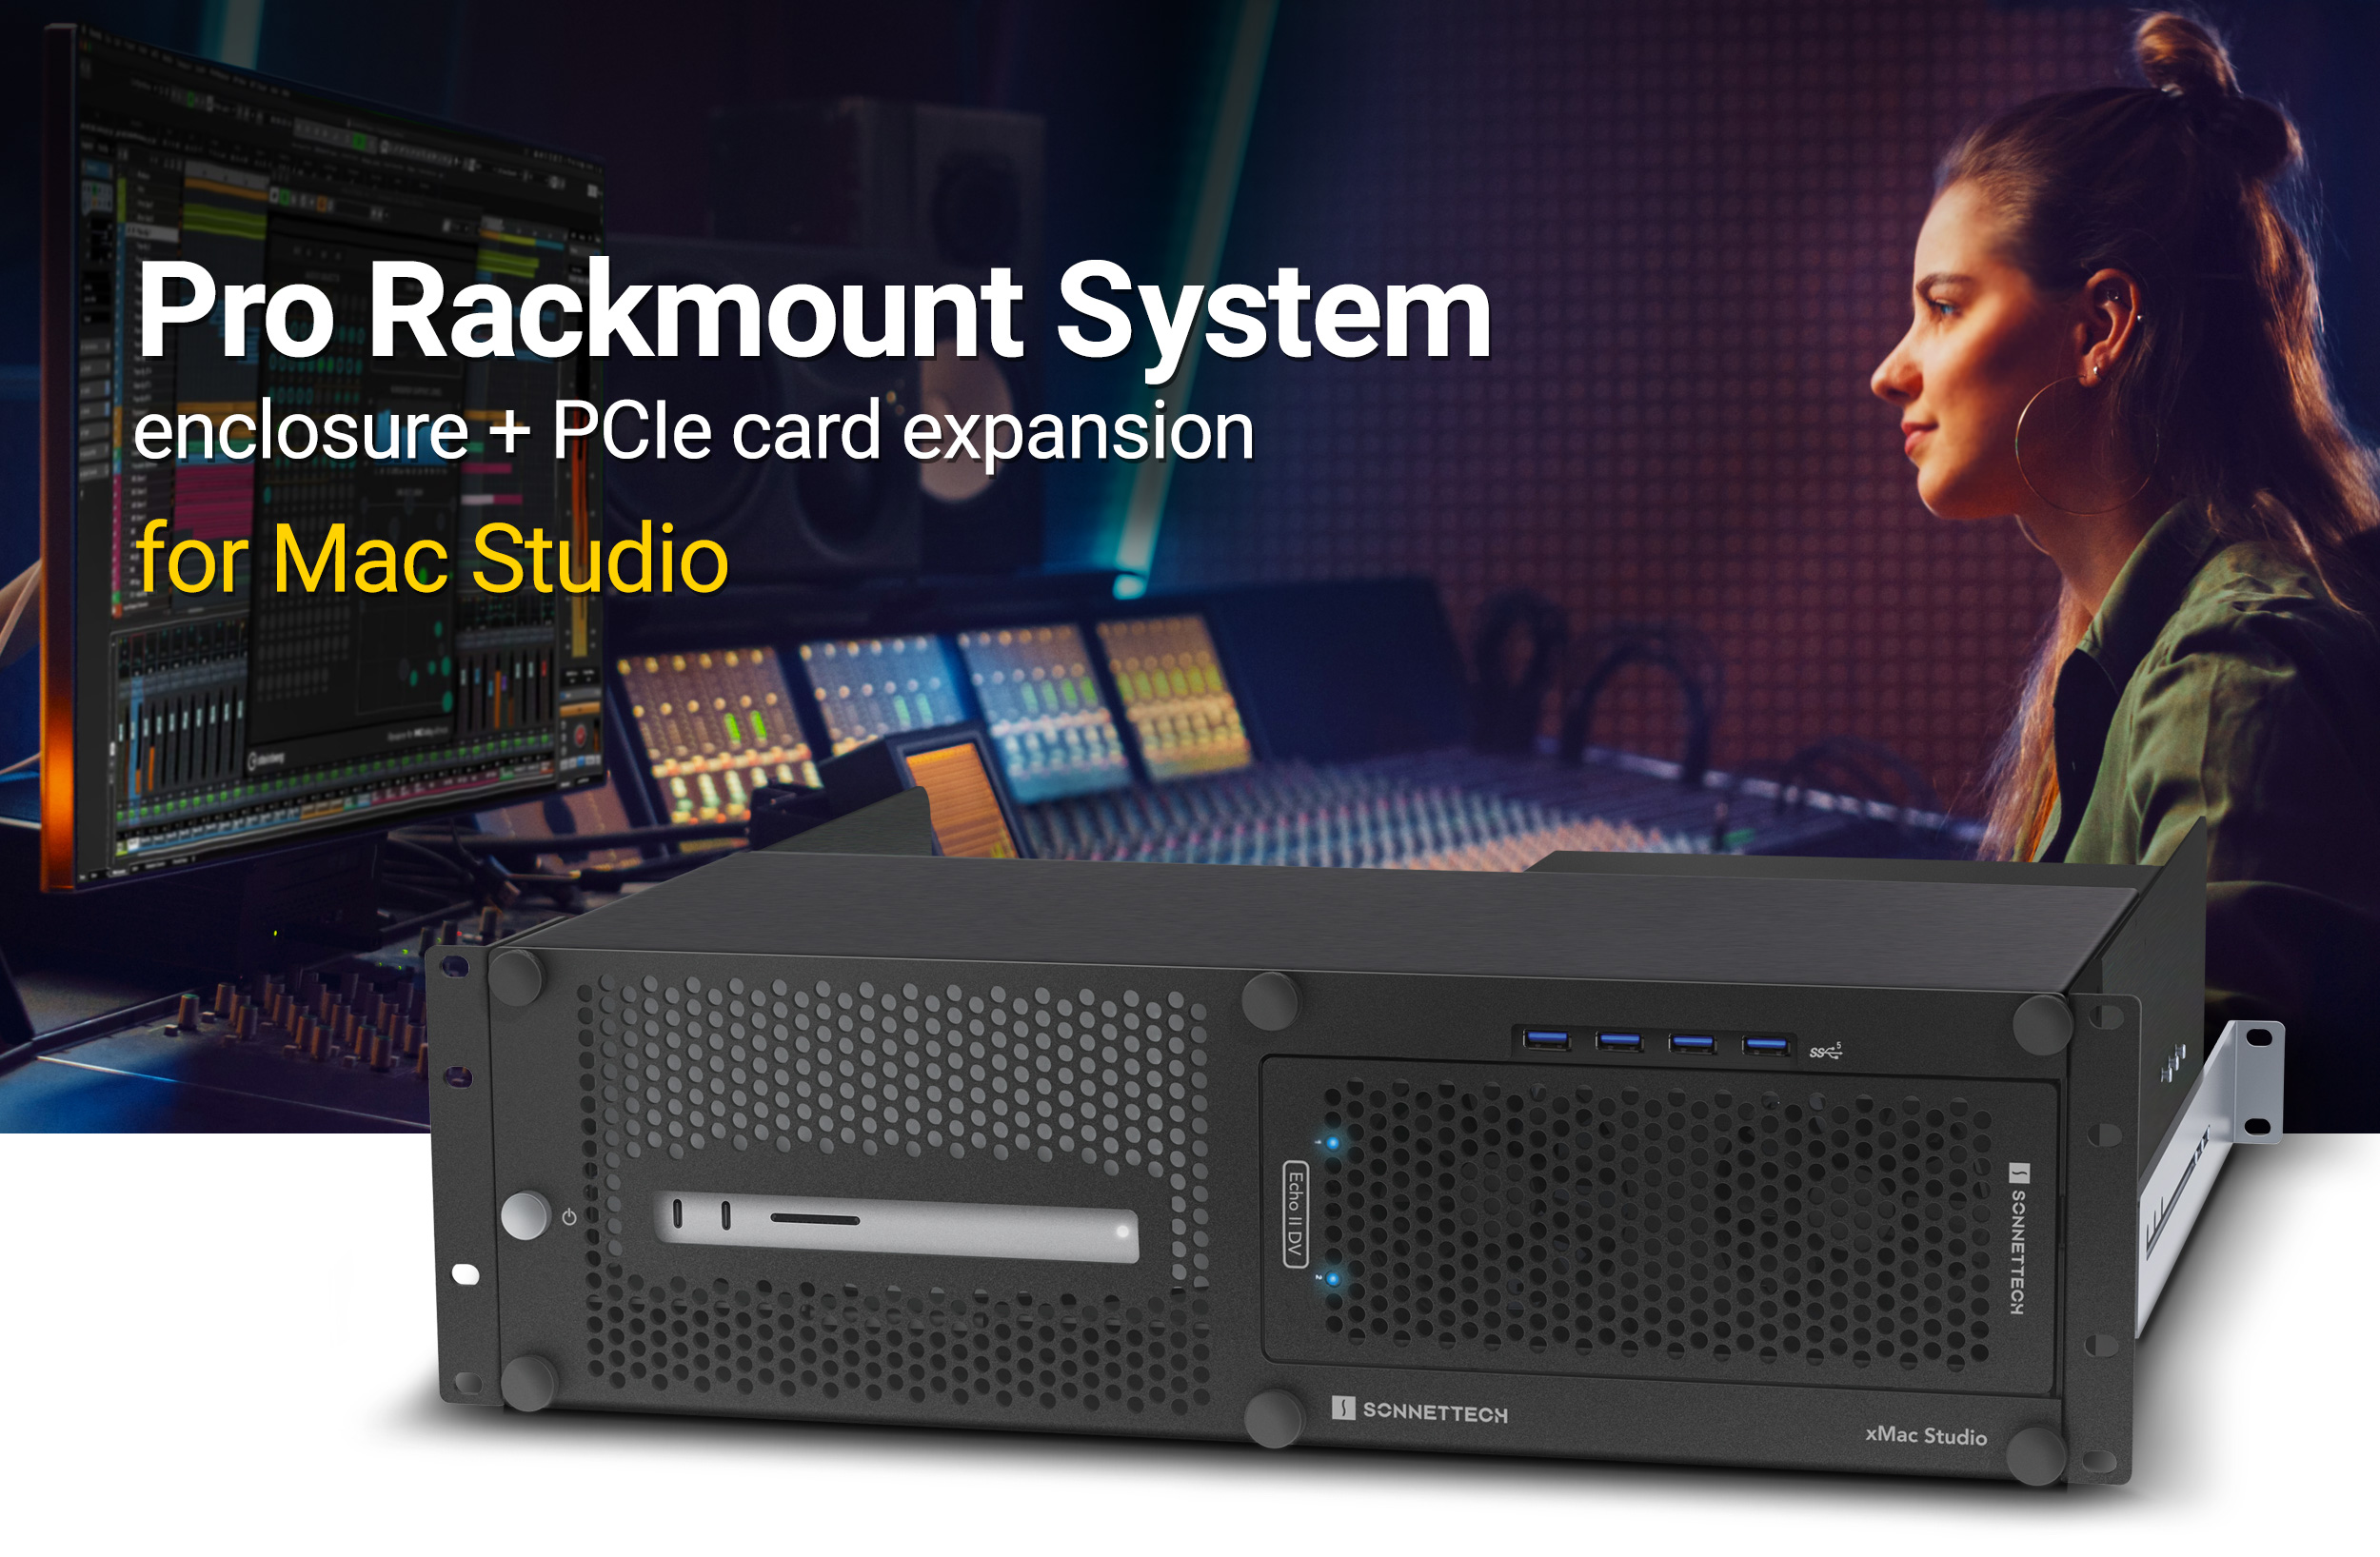 xMac Studio - Pro Rackmount System